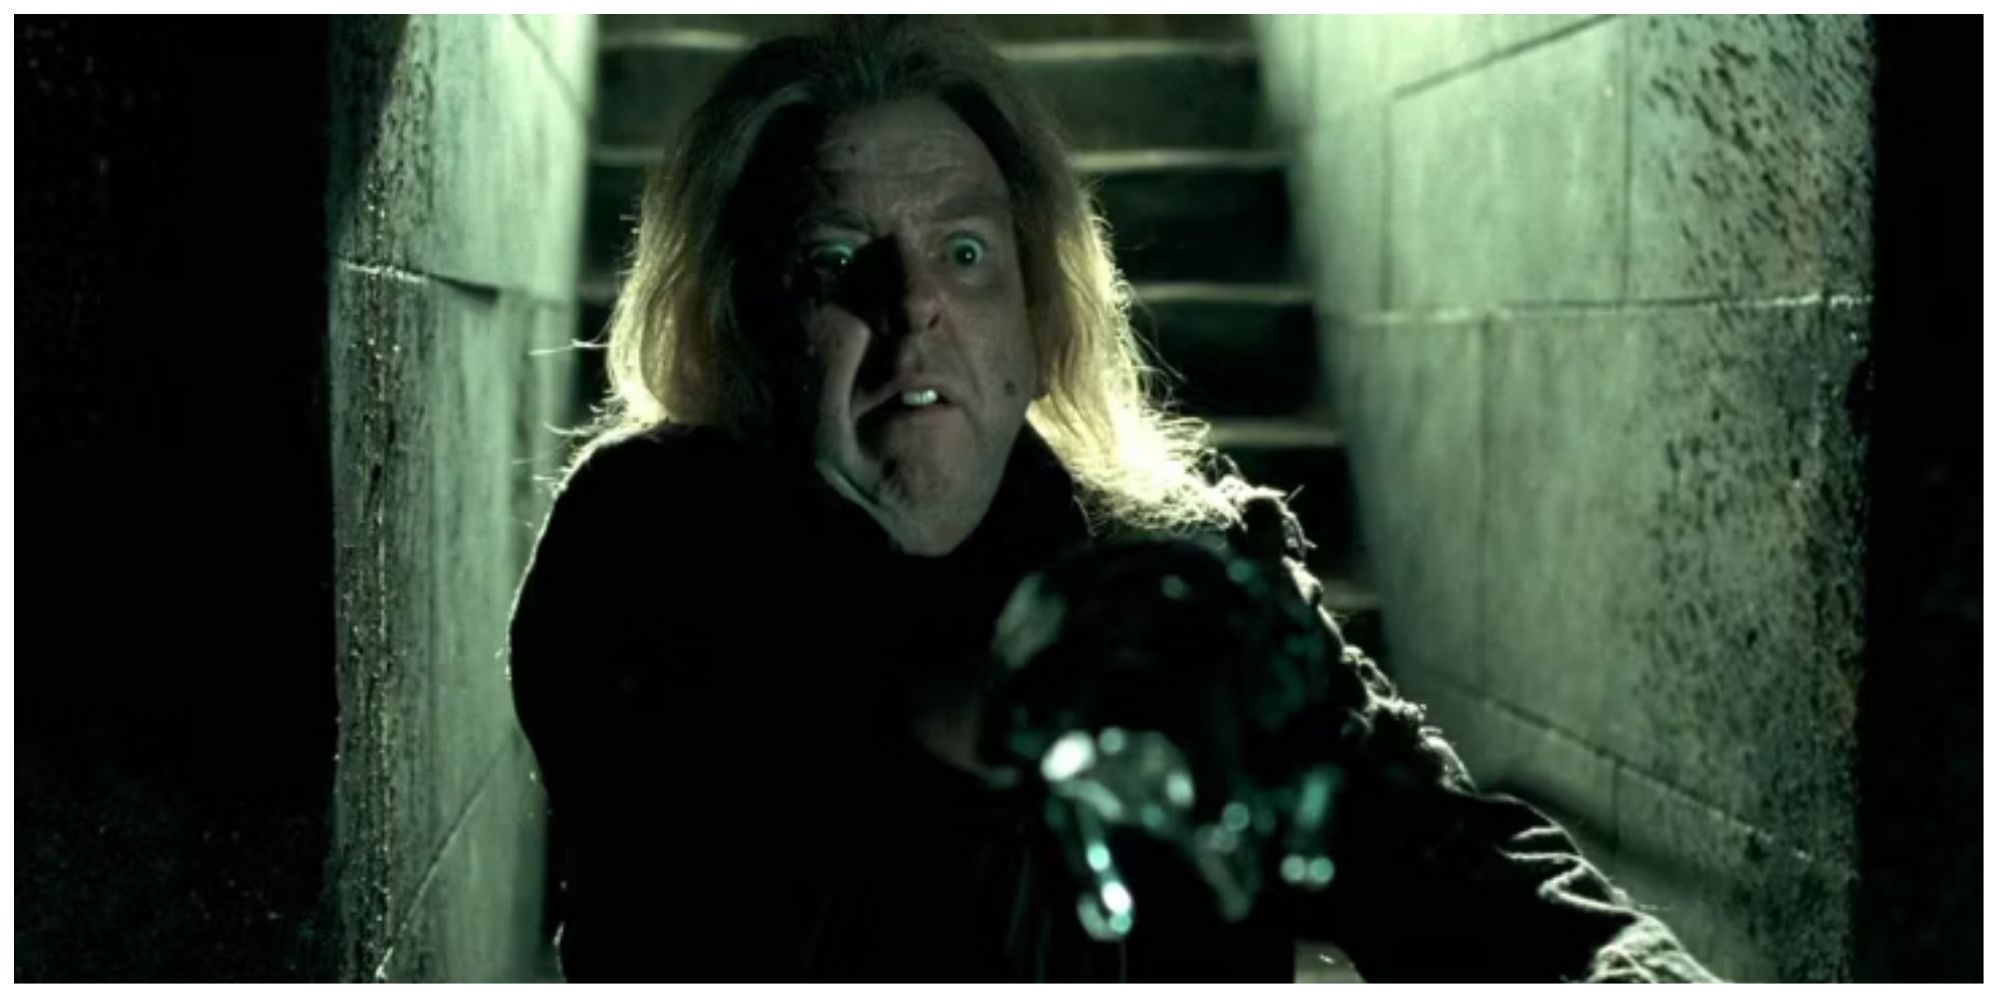 Timothy Spall as Peter Pettigrew aka Wormtail